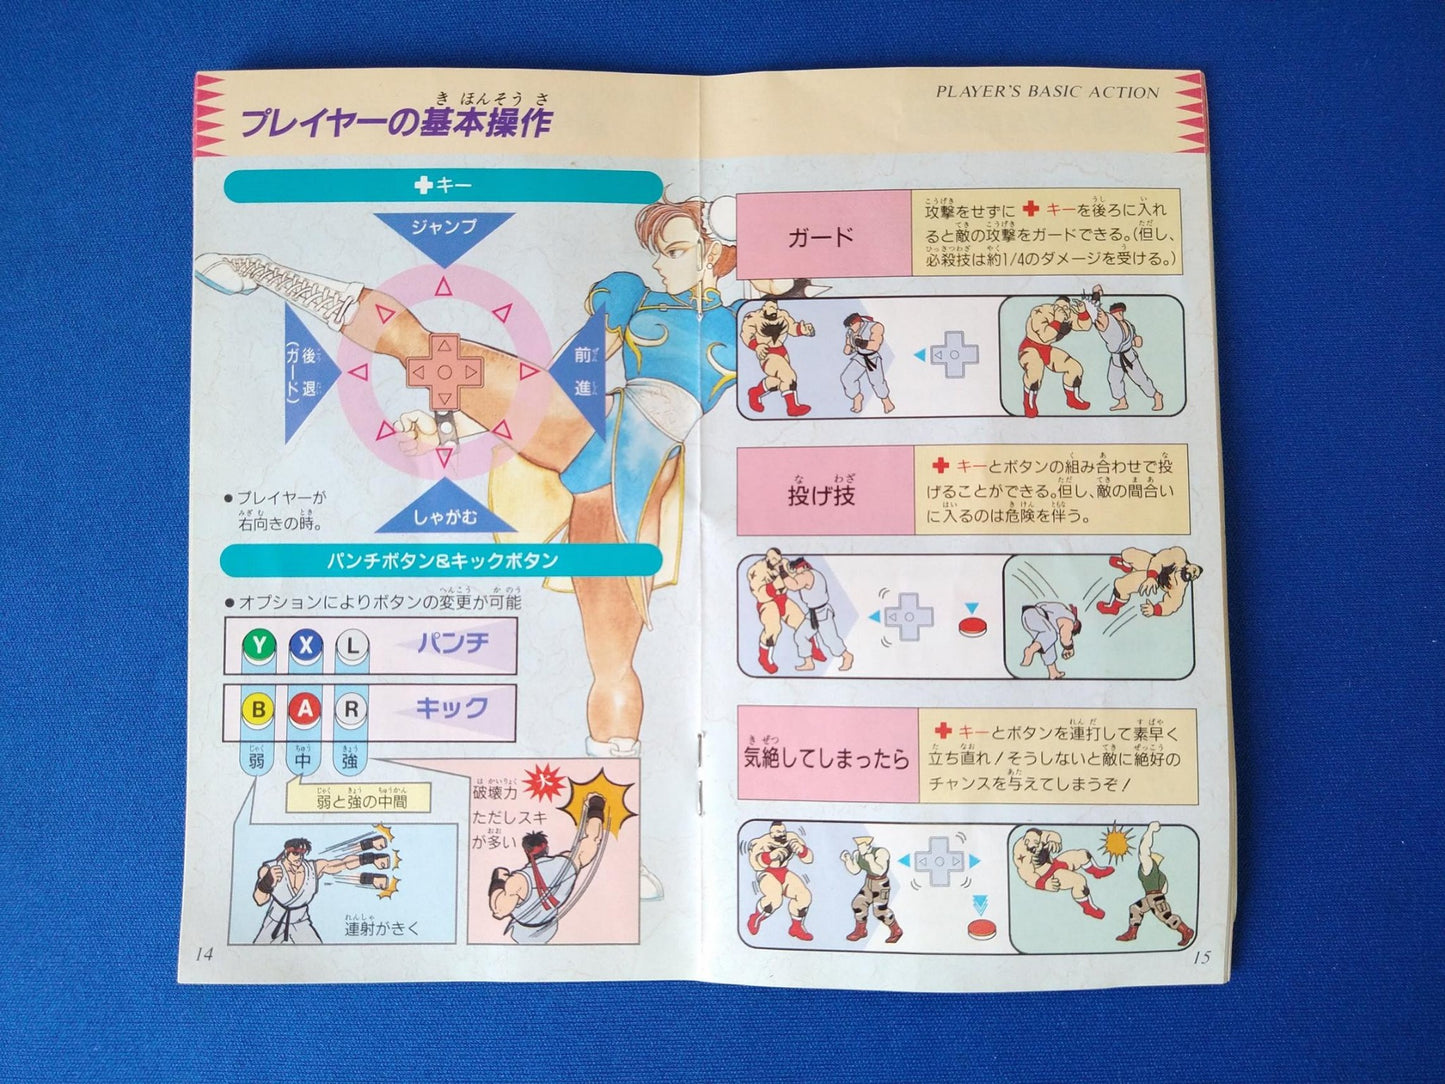 Street Fighter 2 Nintendo Super Famicom Game Cartridge w/Manual, Box set-f0505-